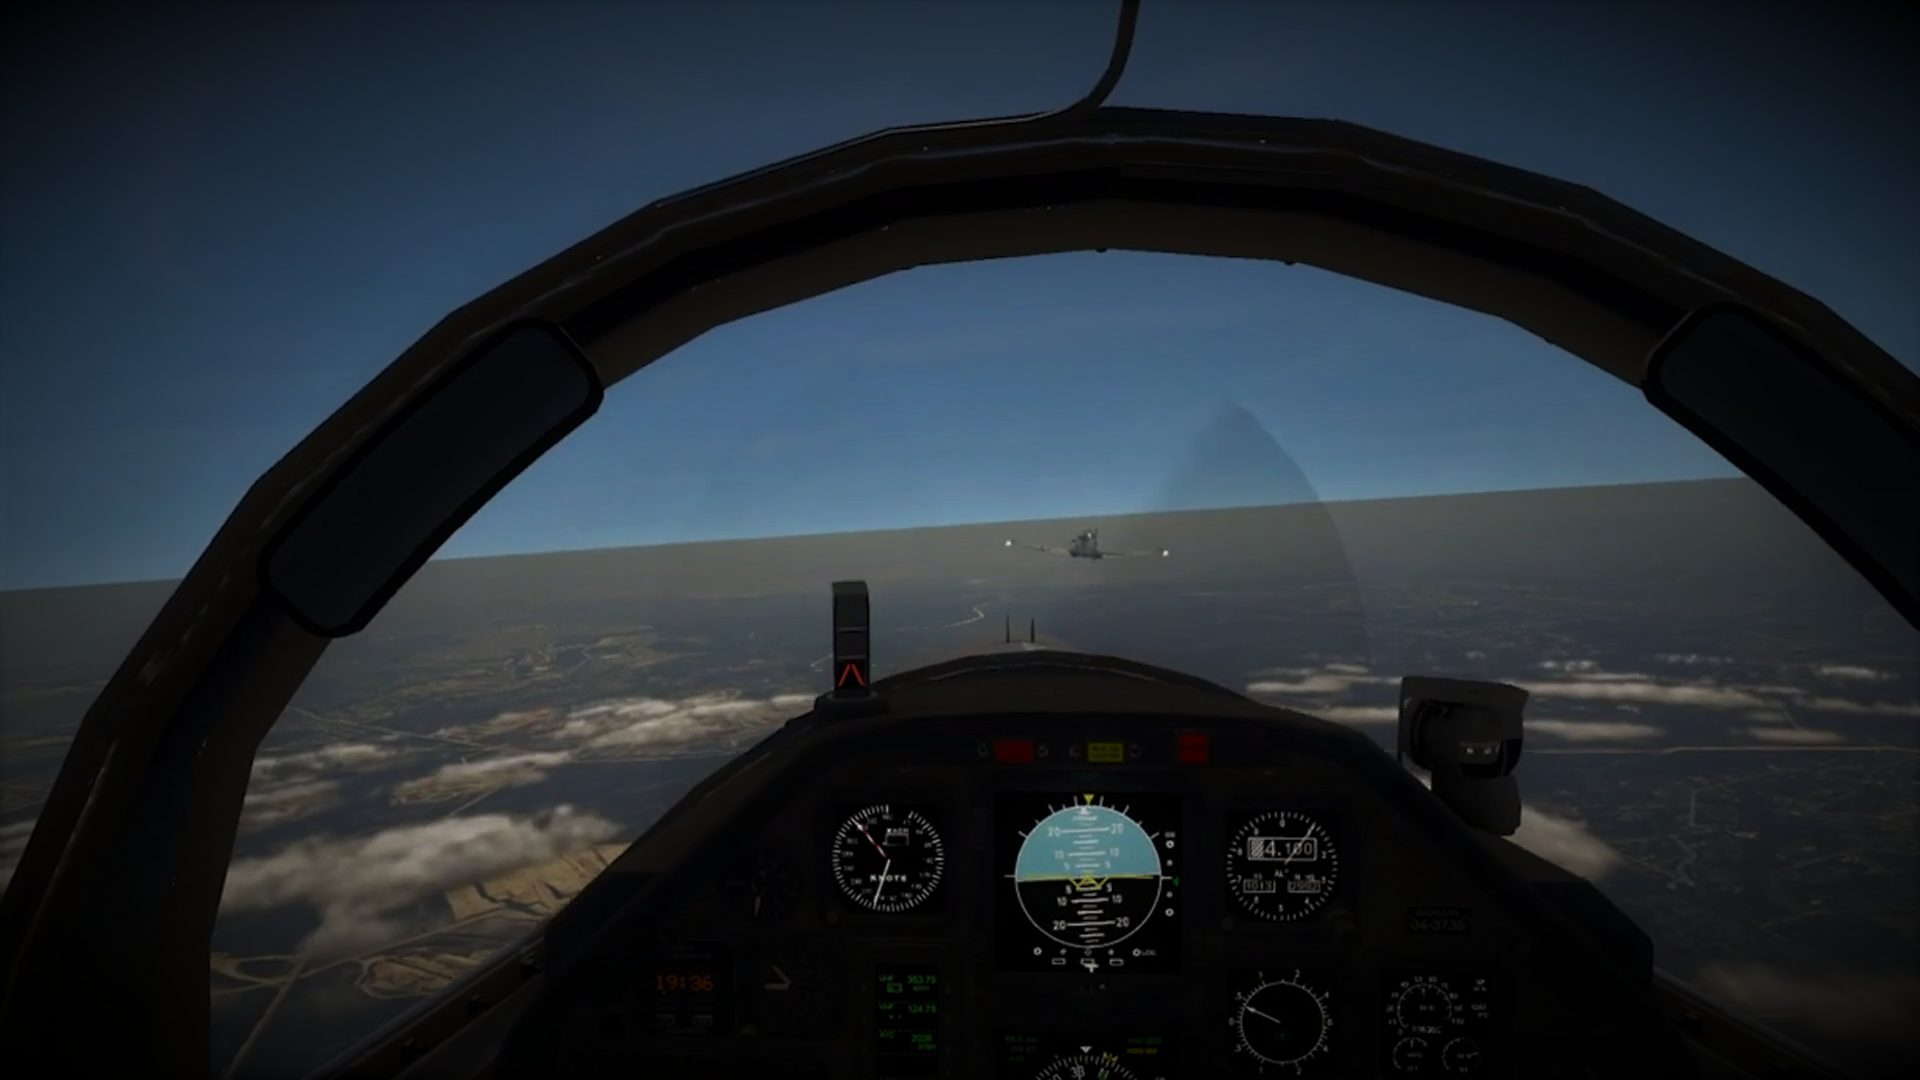 Flight simulator by SAIC